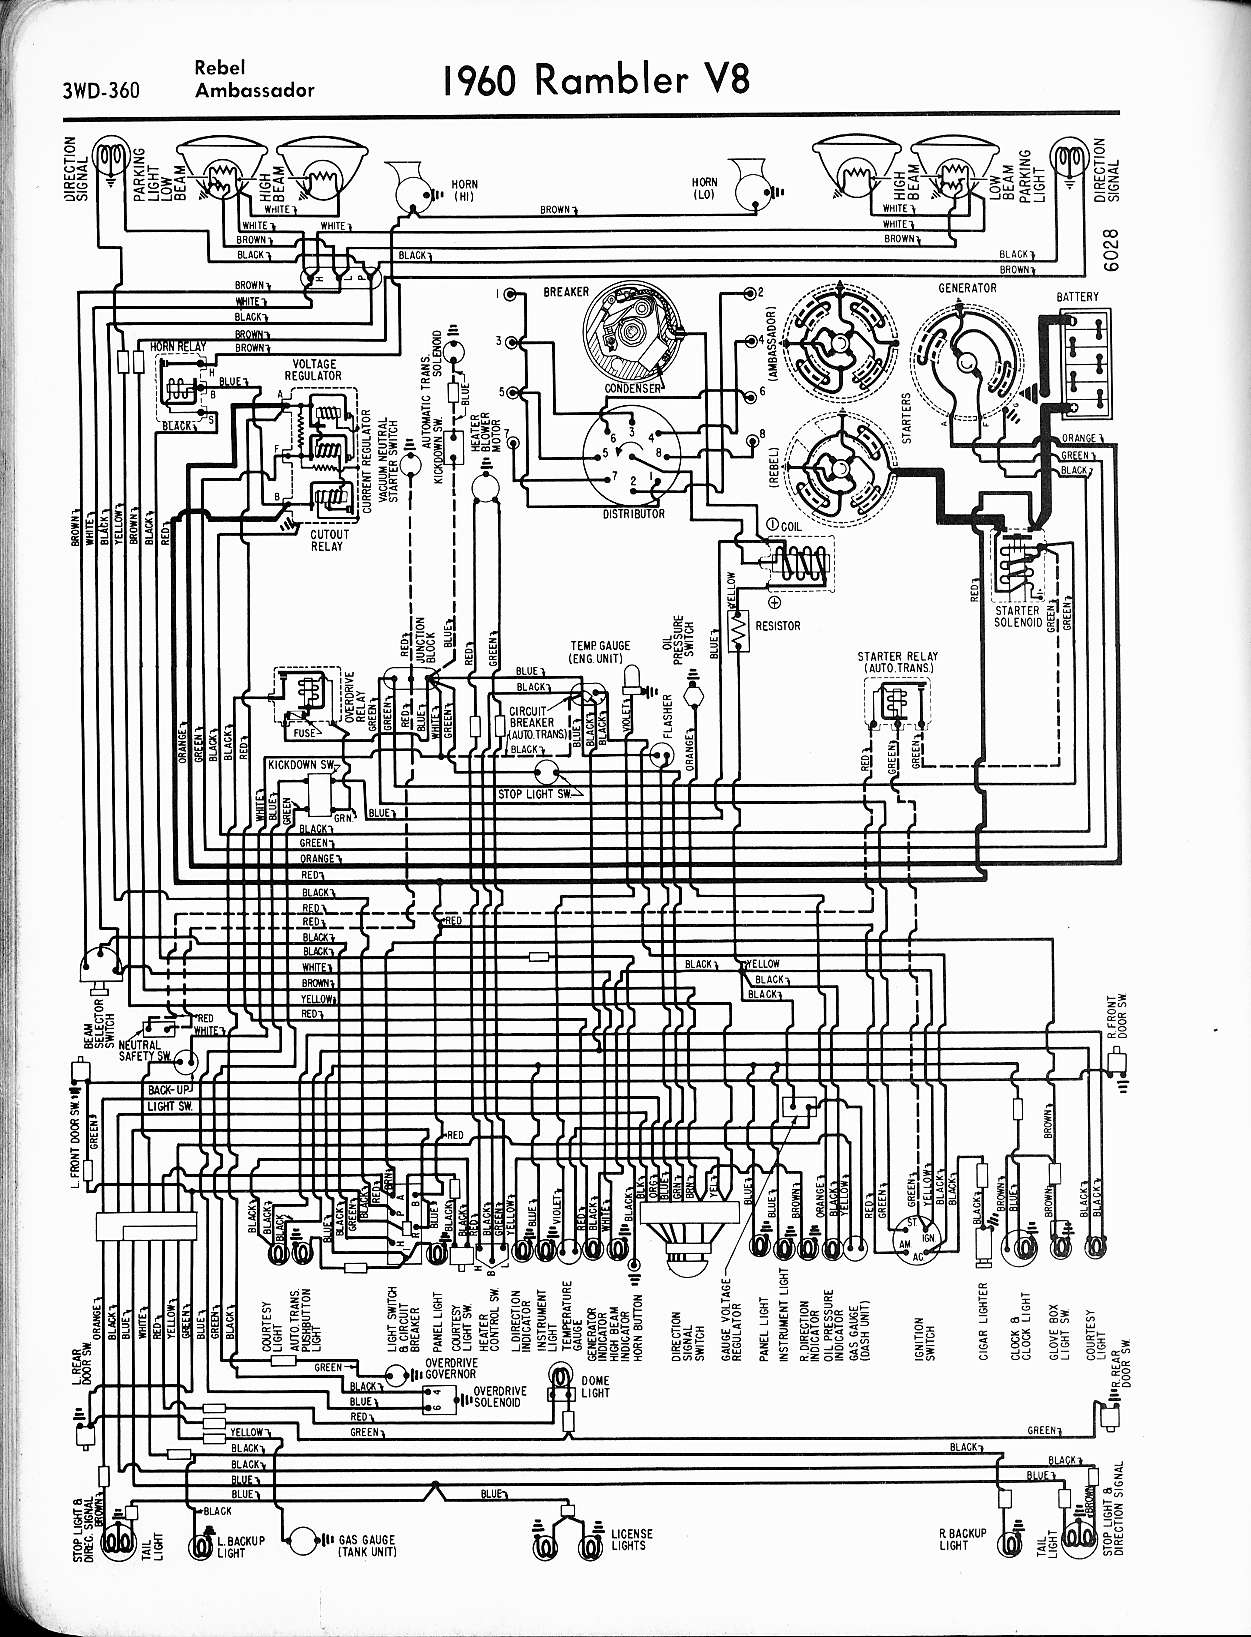 1968 Amc Javelin Wiring Diagram | Wiring Library 1968 amc rebel wiring diagram 